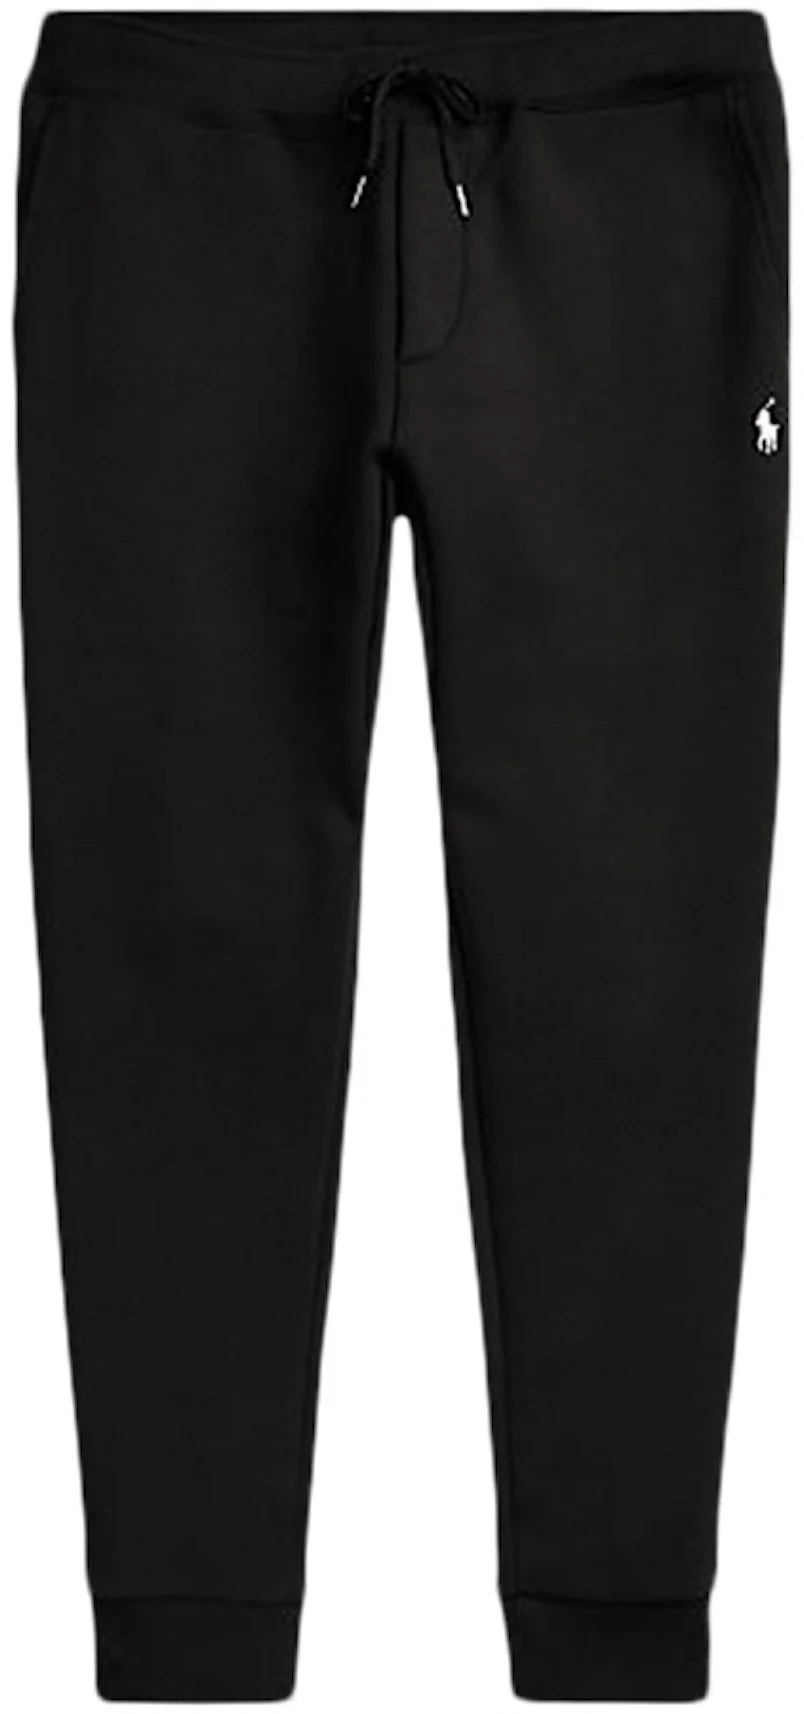 Mens Polo Ralph Lauren black Fleece Lunar Sweatpants